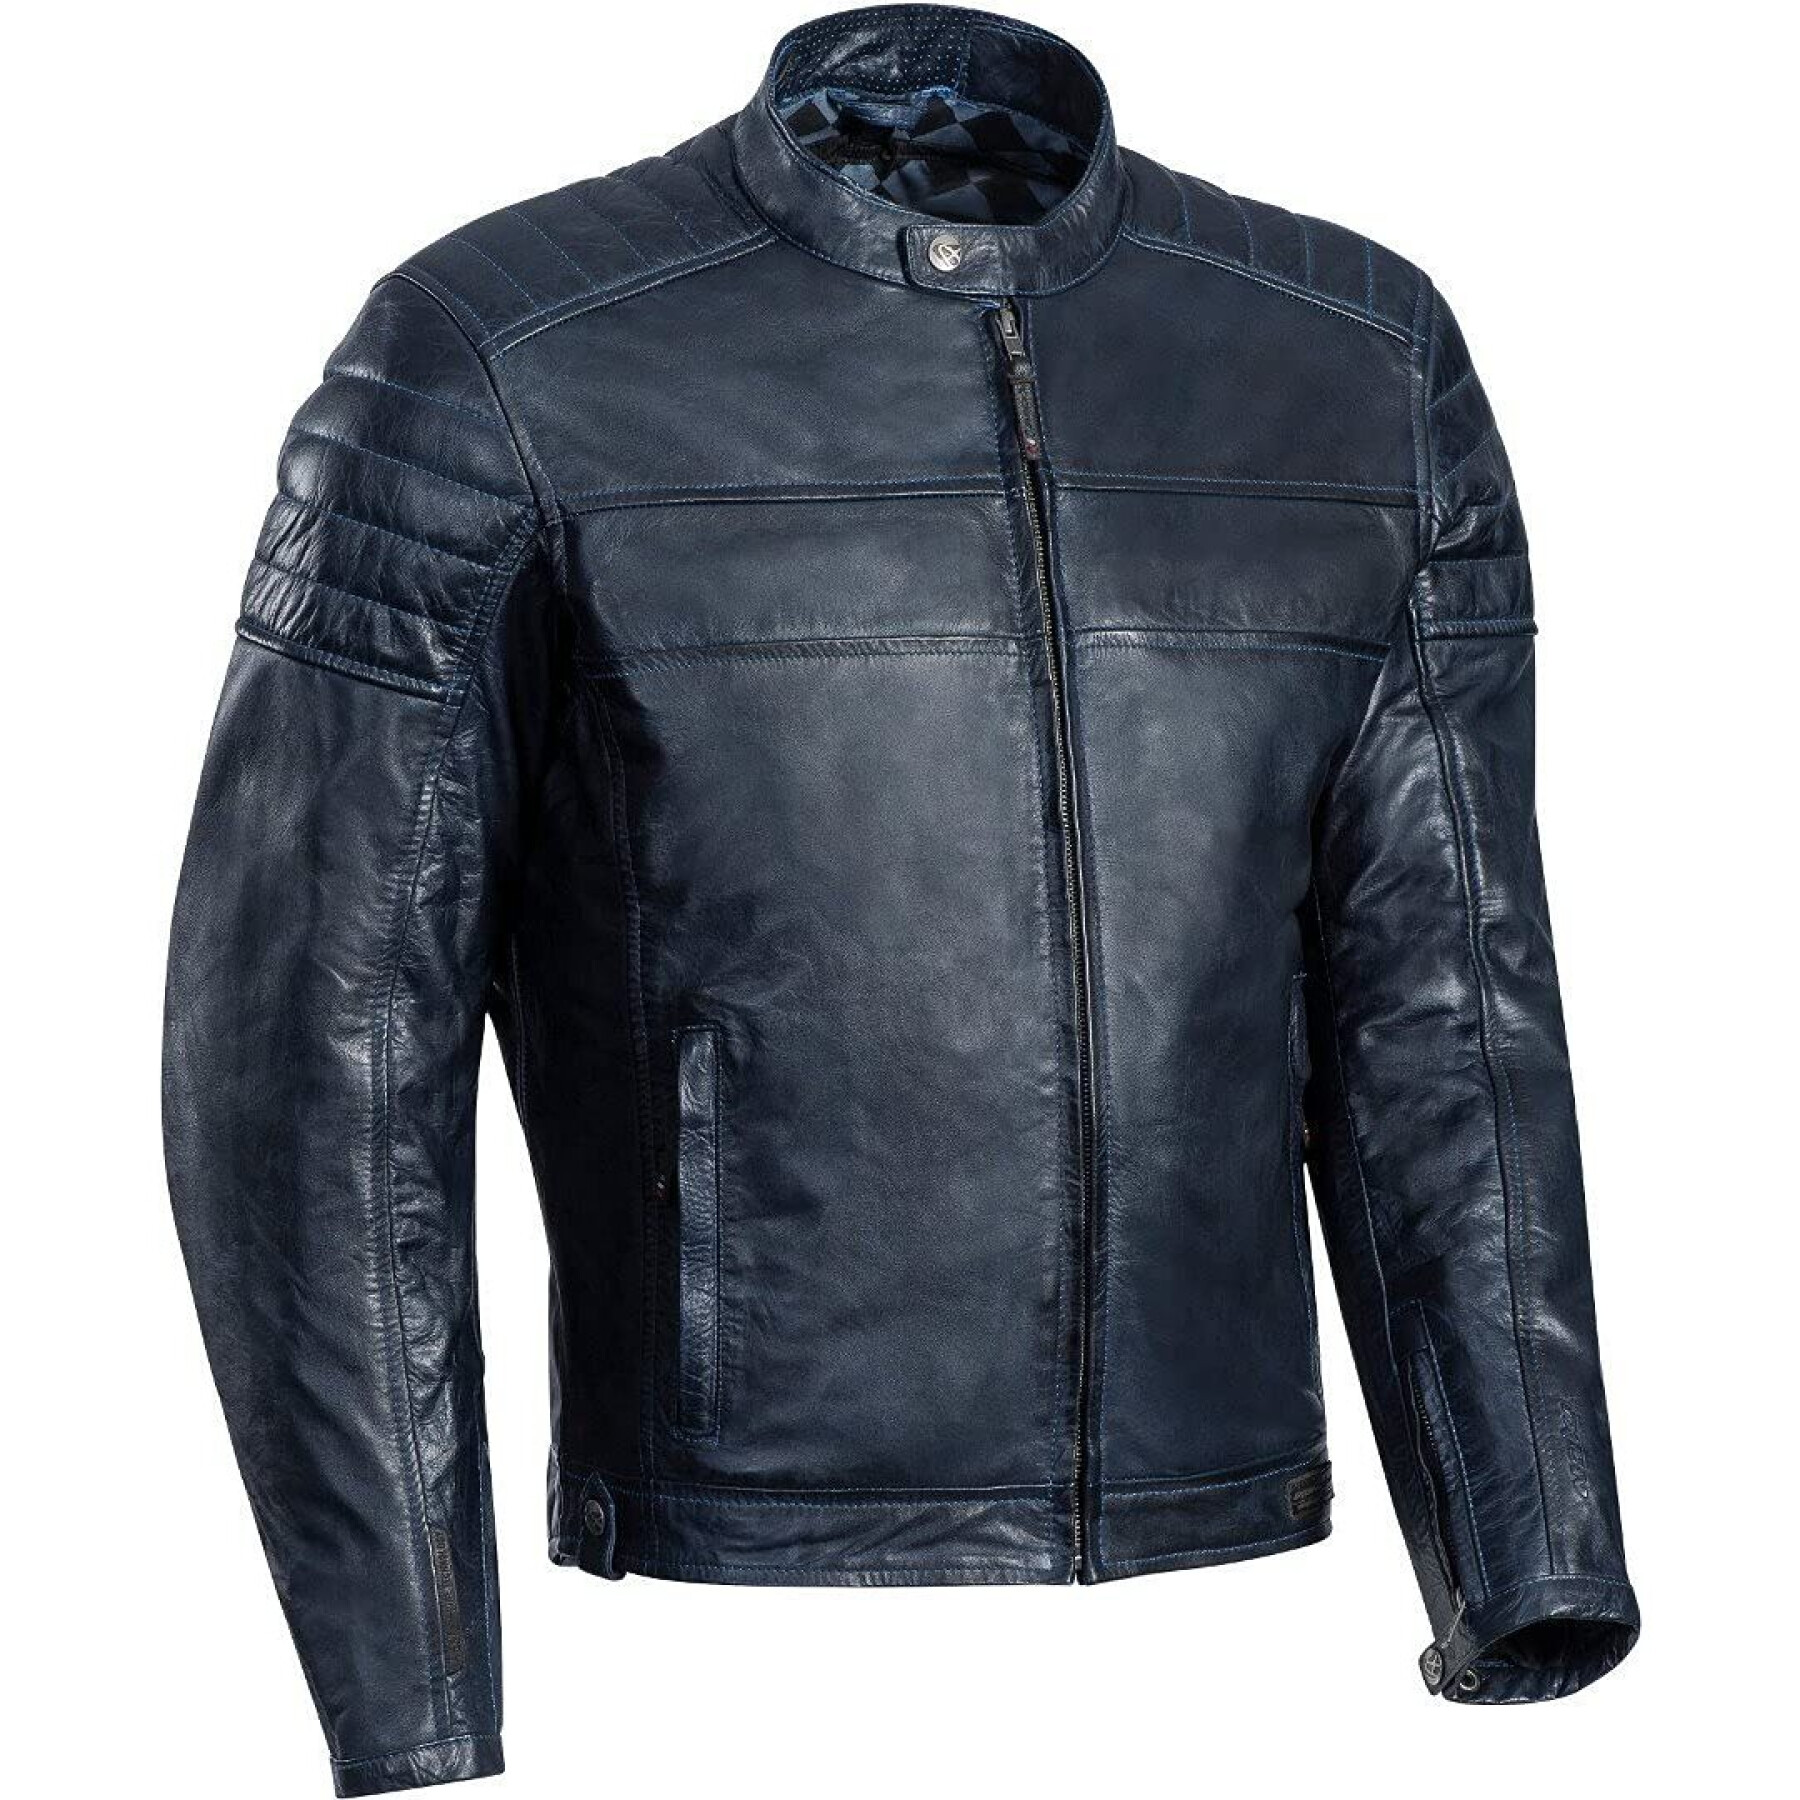 Leather motorcycle jacket Ixon spark